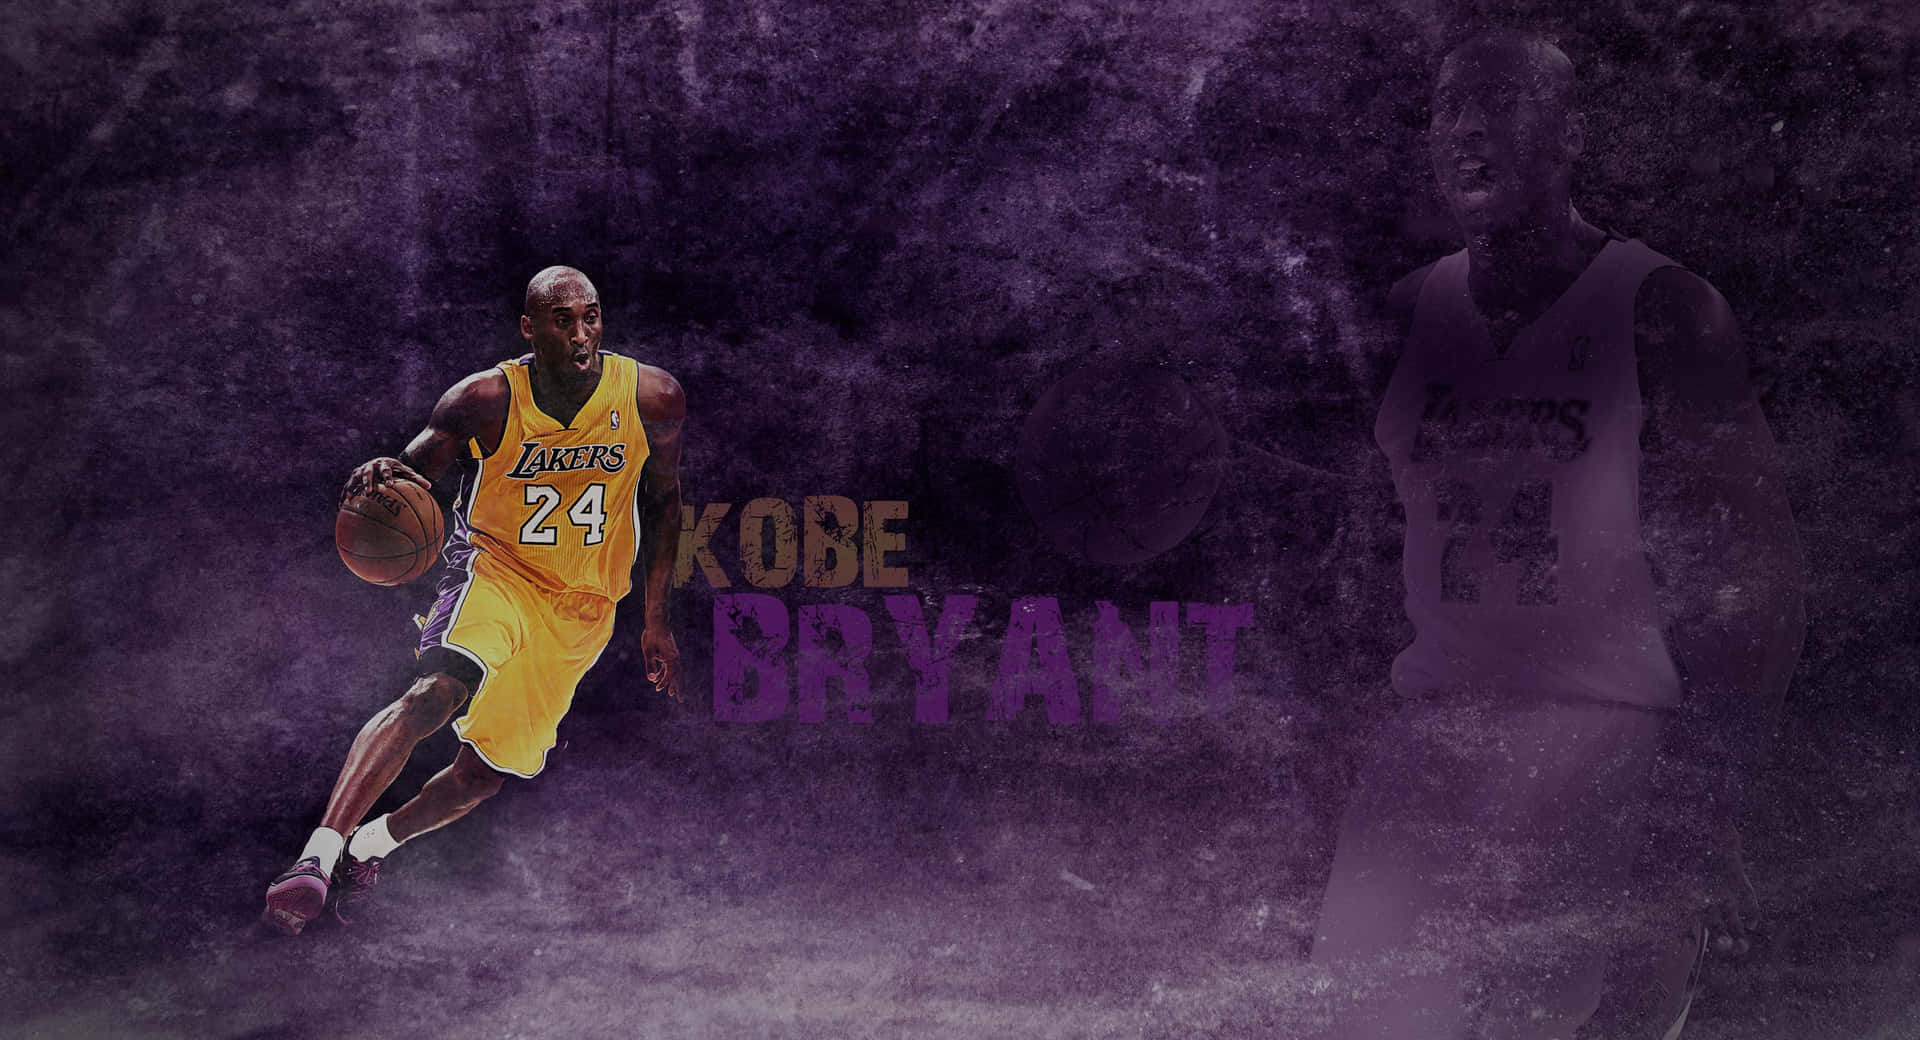 Kobe Forever - Celebrating the Legacy of the Great Kobe Bryant